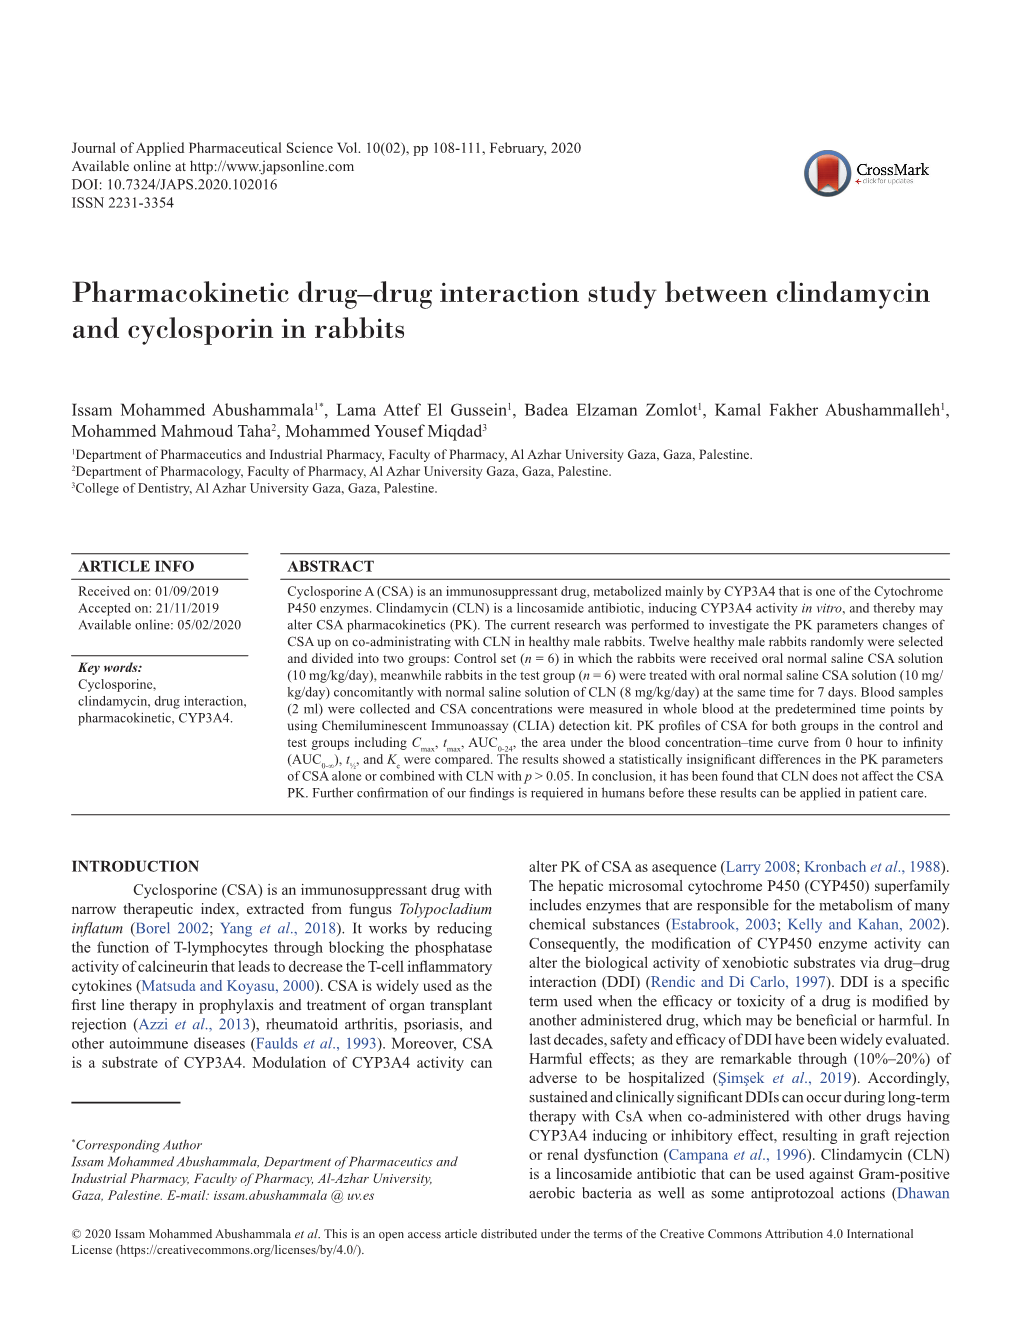 Pharmacokinetic Drug–Drug Interaction Study Between Clindamycin and Cyclosporin in Rabbits